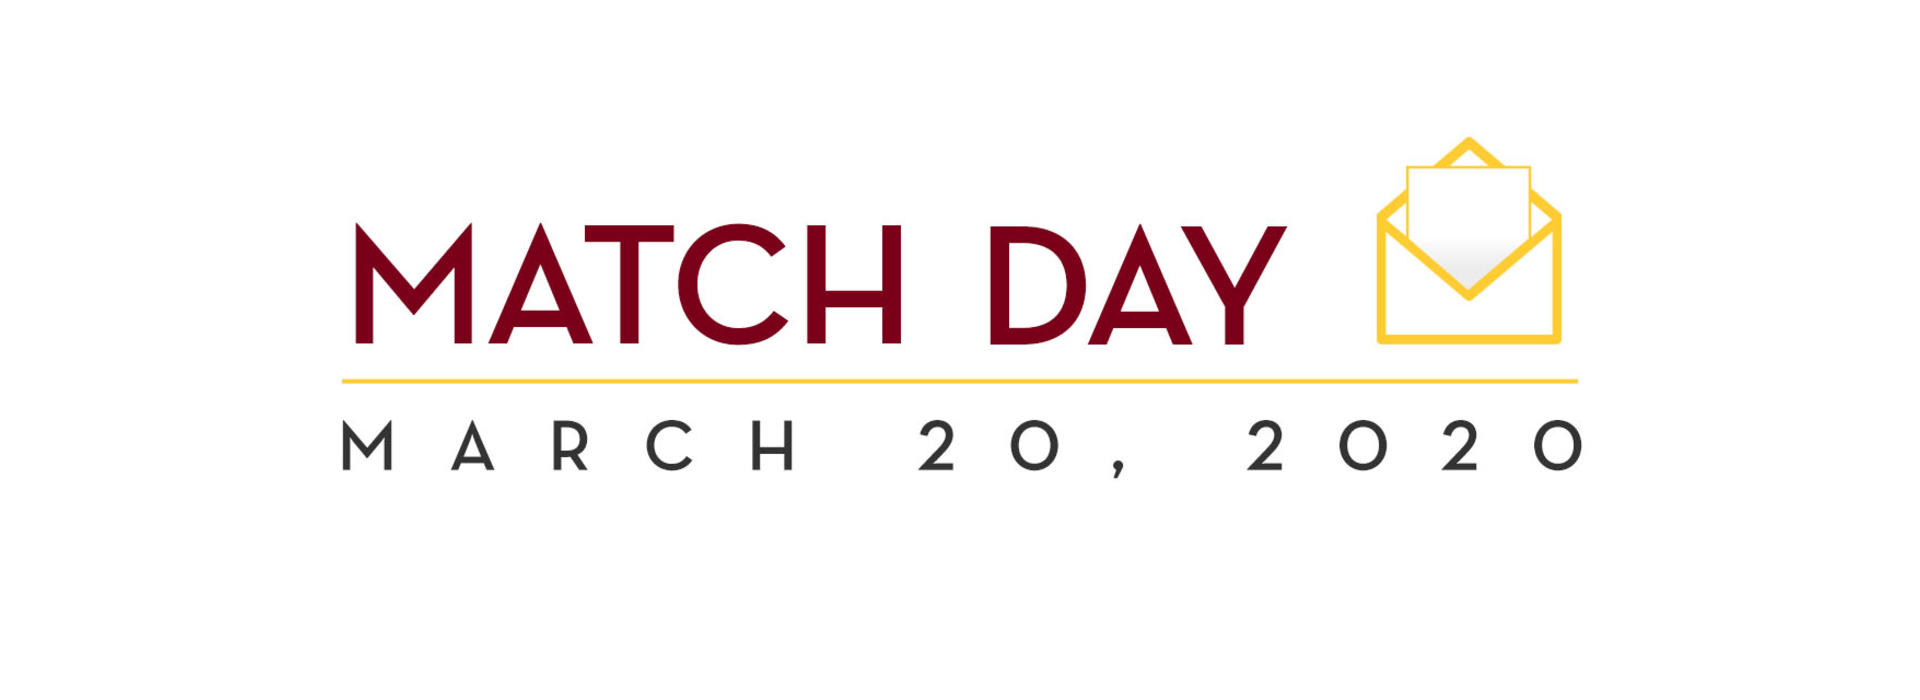 Match Day 2020 University of Minnesota Medical School